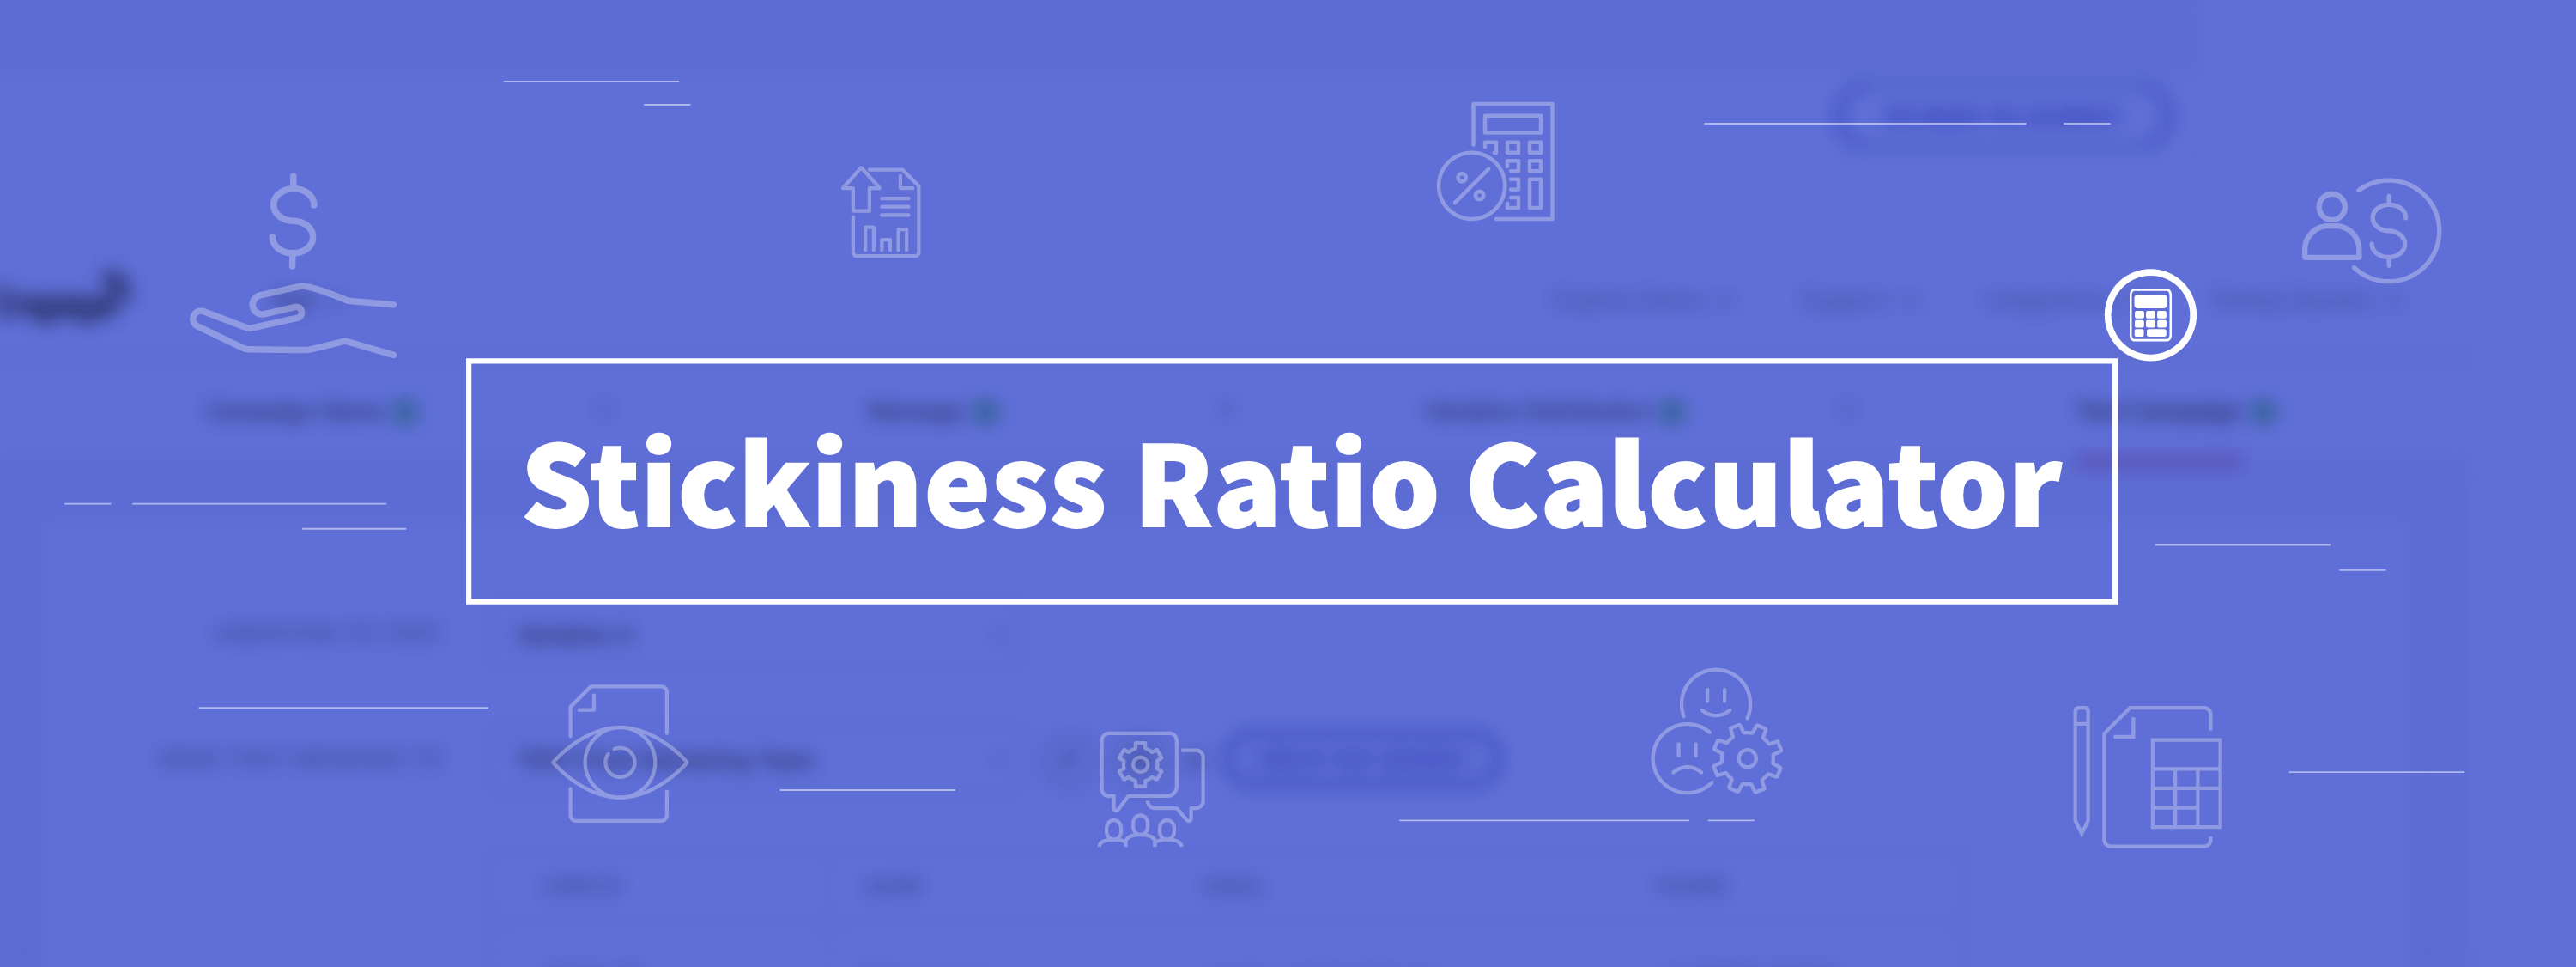 Stickiness Ratio Calculator